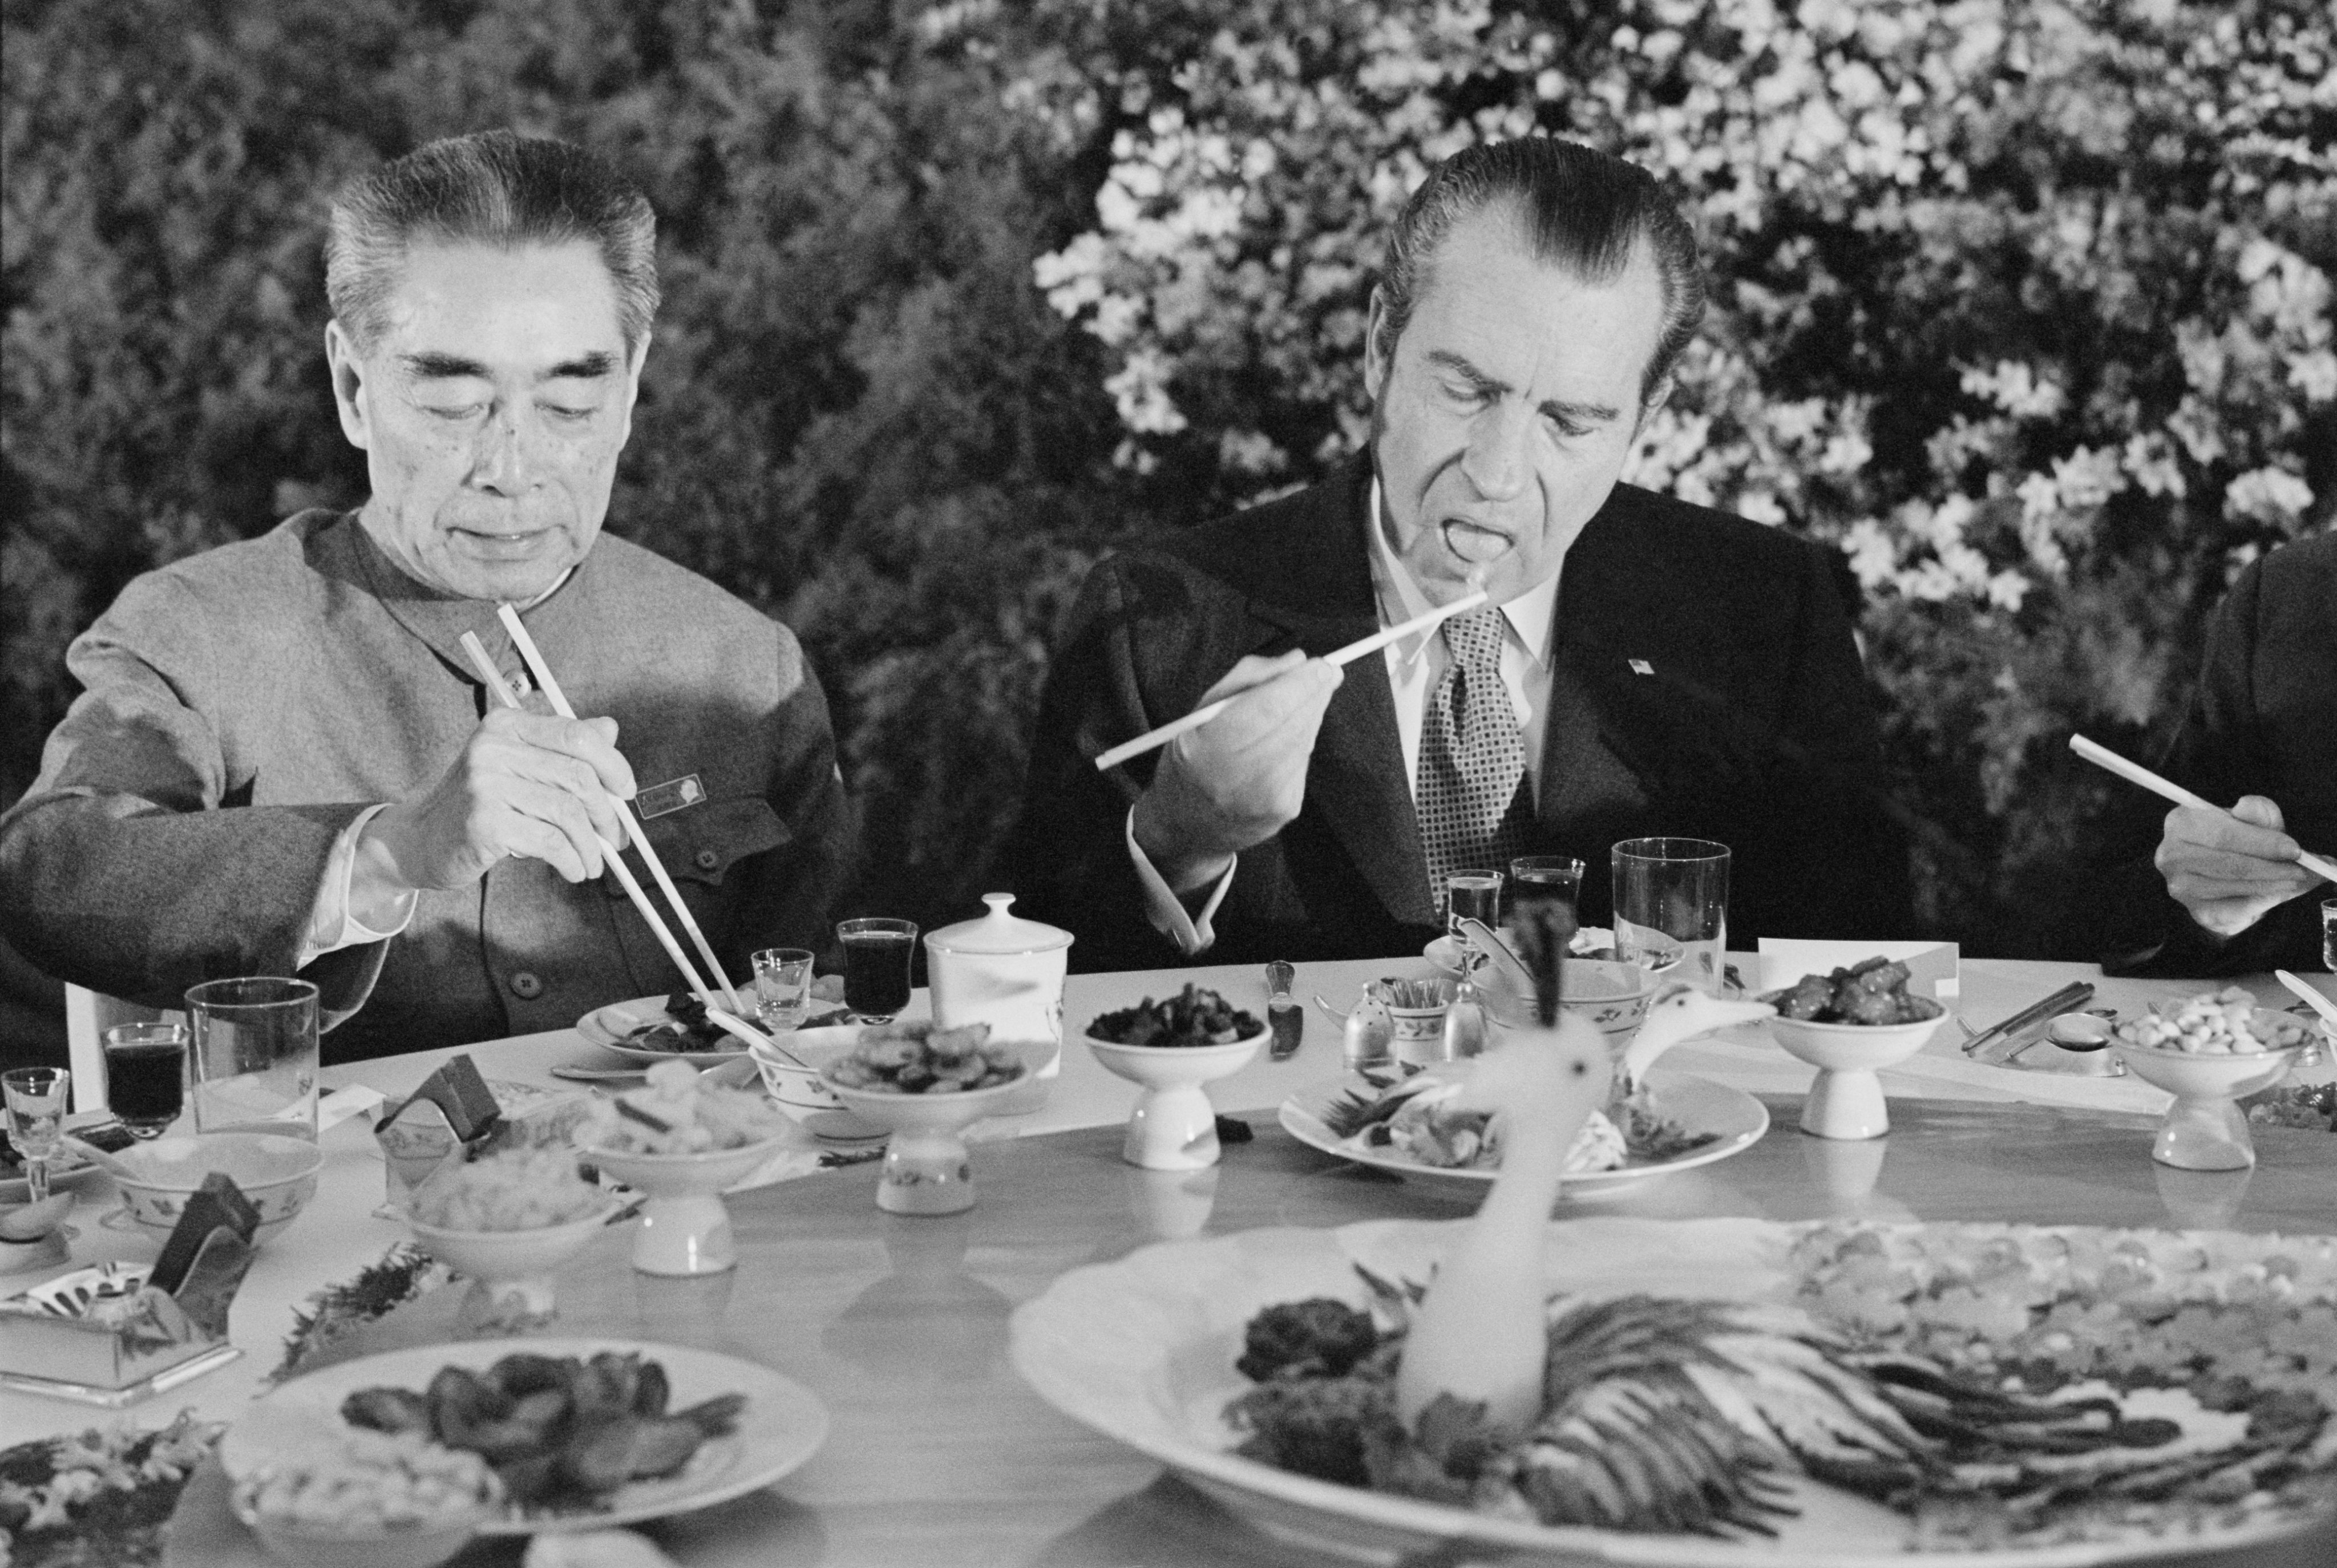 President Nixon Eating With Chopsticks